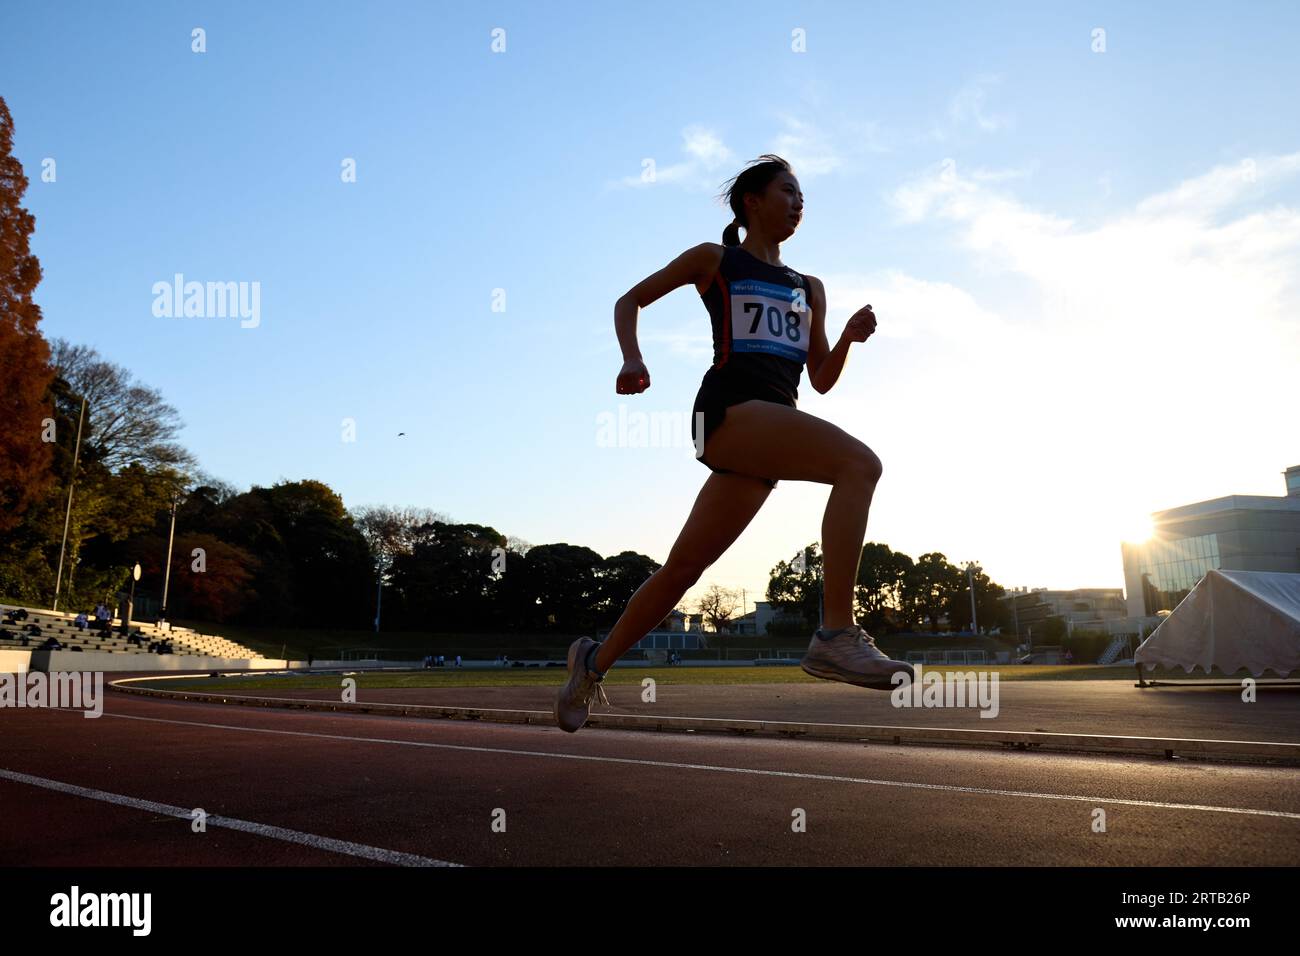 Japanese athlete running on track Stock Photo